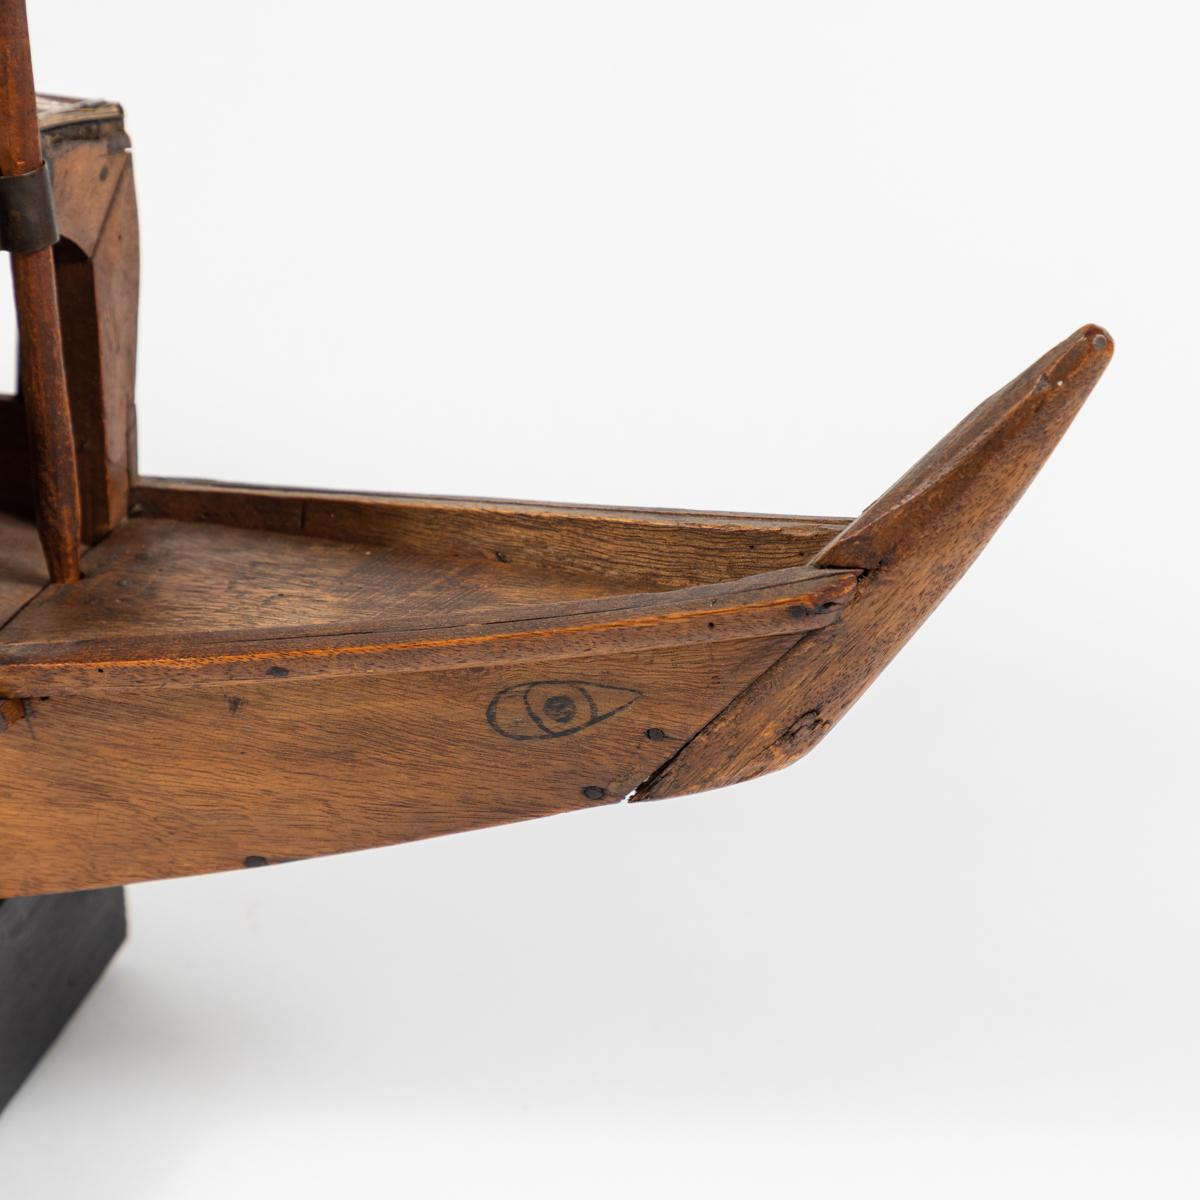 19th Century Rustic Belgian Wooden Boat